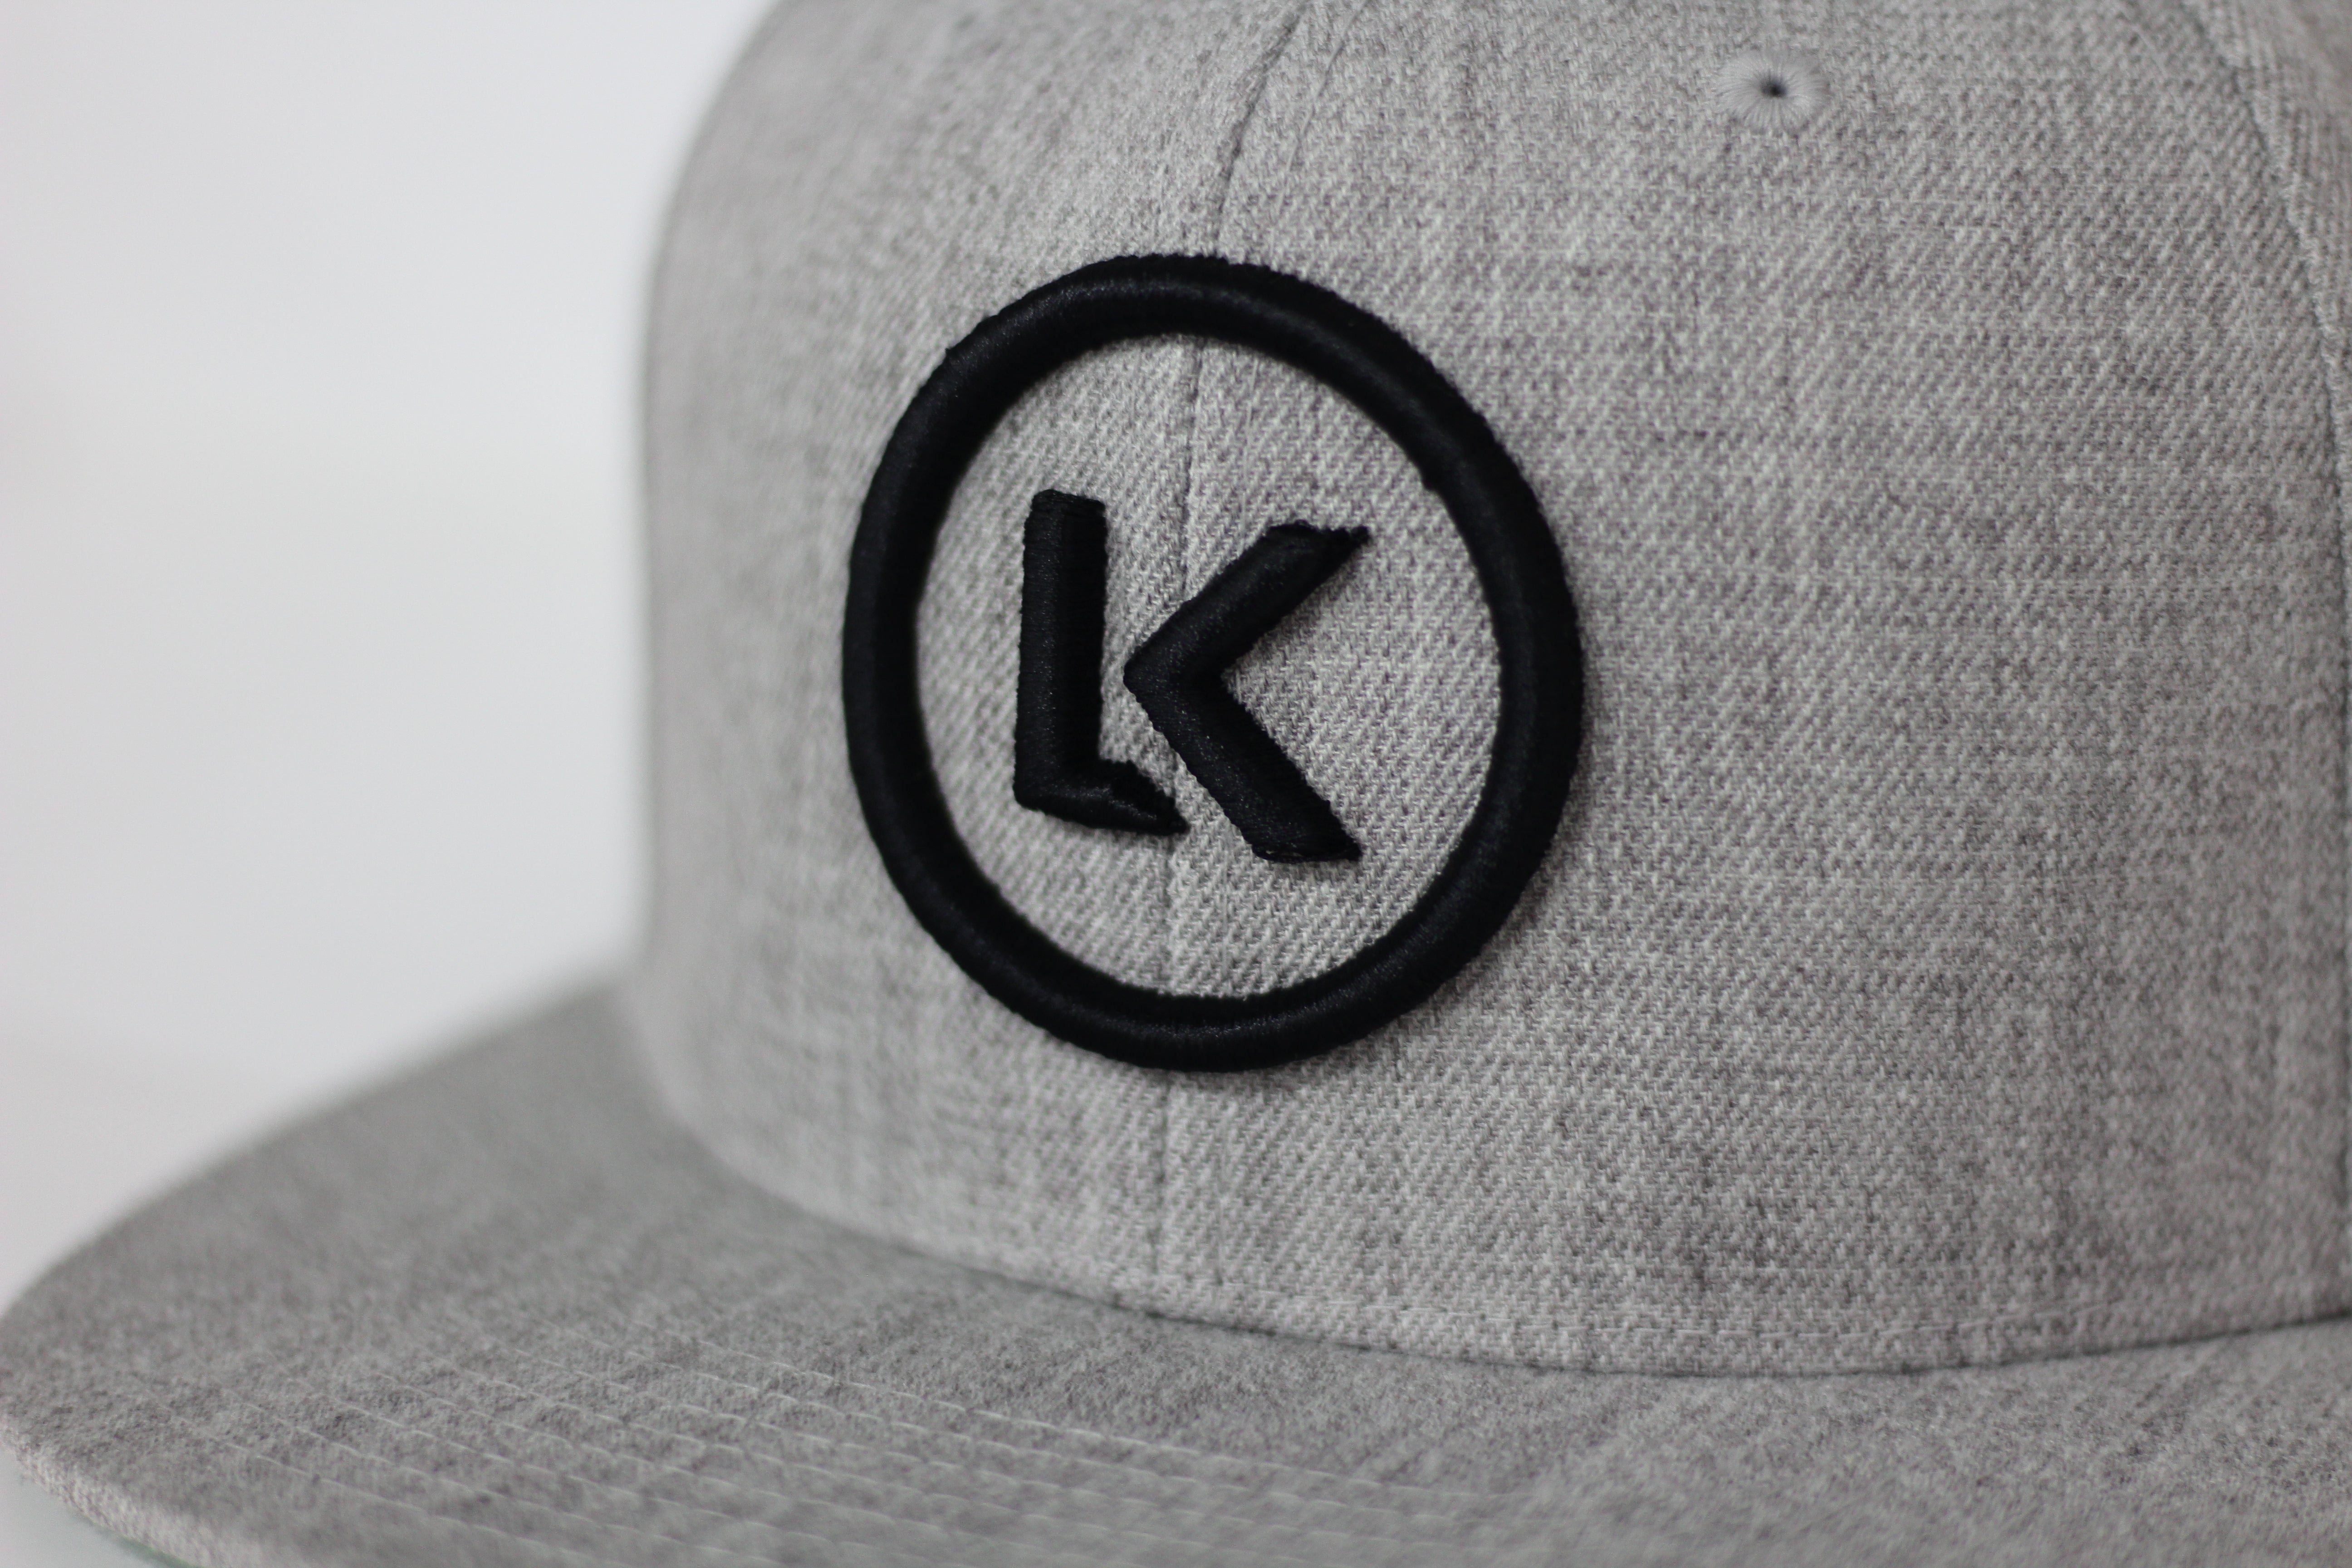 Legit Brand 3D Puff Snapback Hat Grey - Legitkicks.ca 